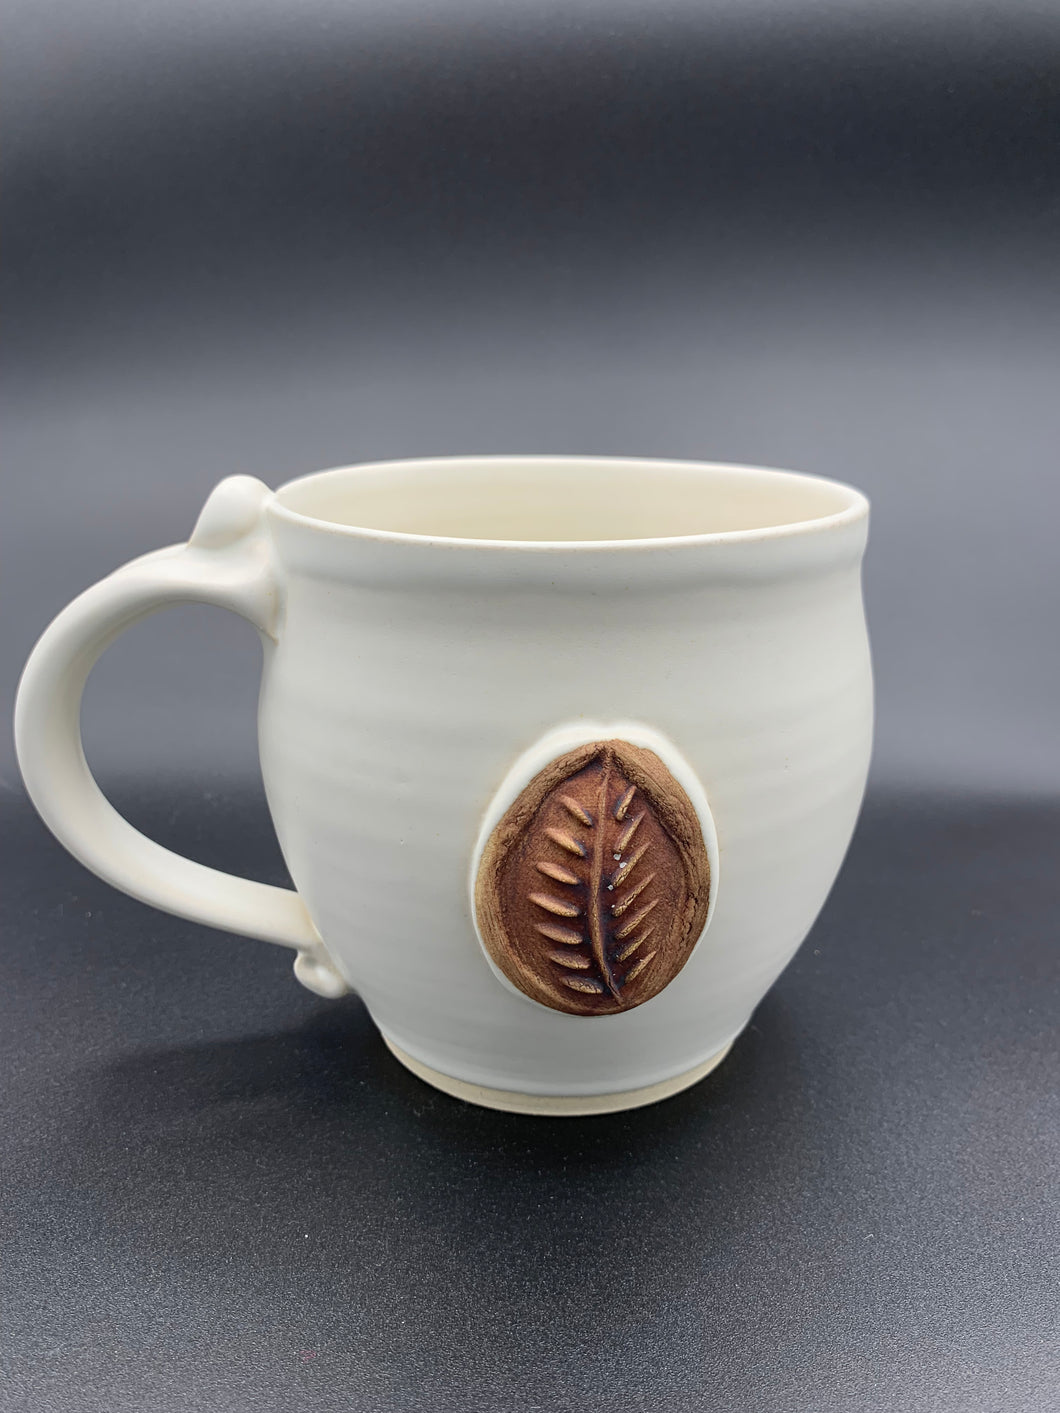 Latte/soup mug - new growth